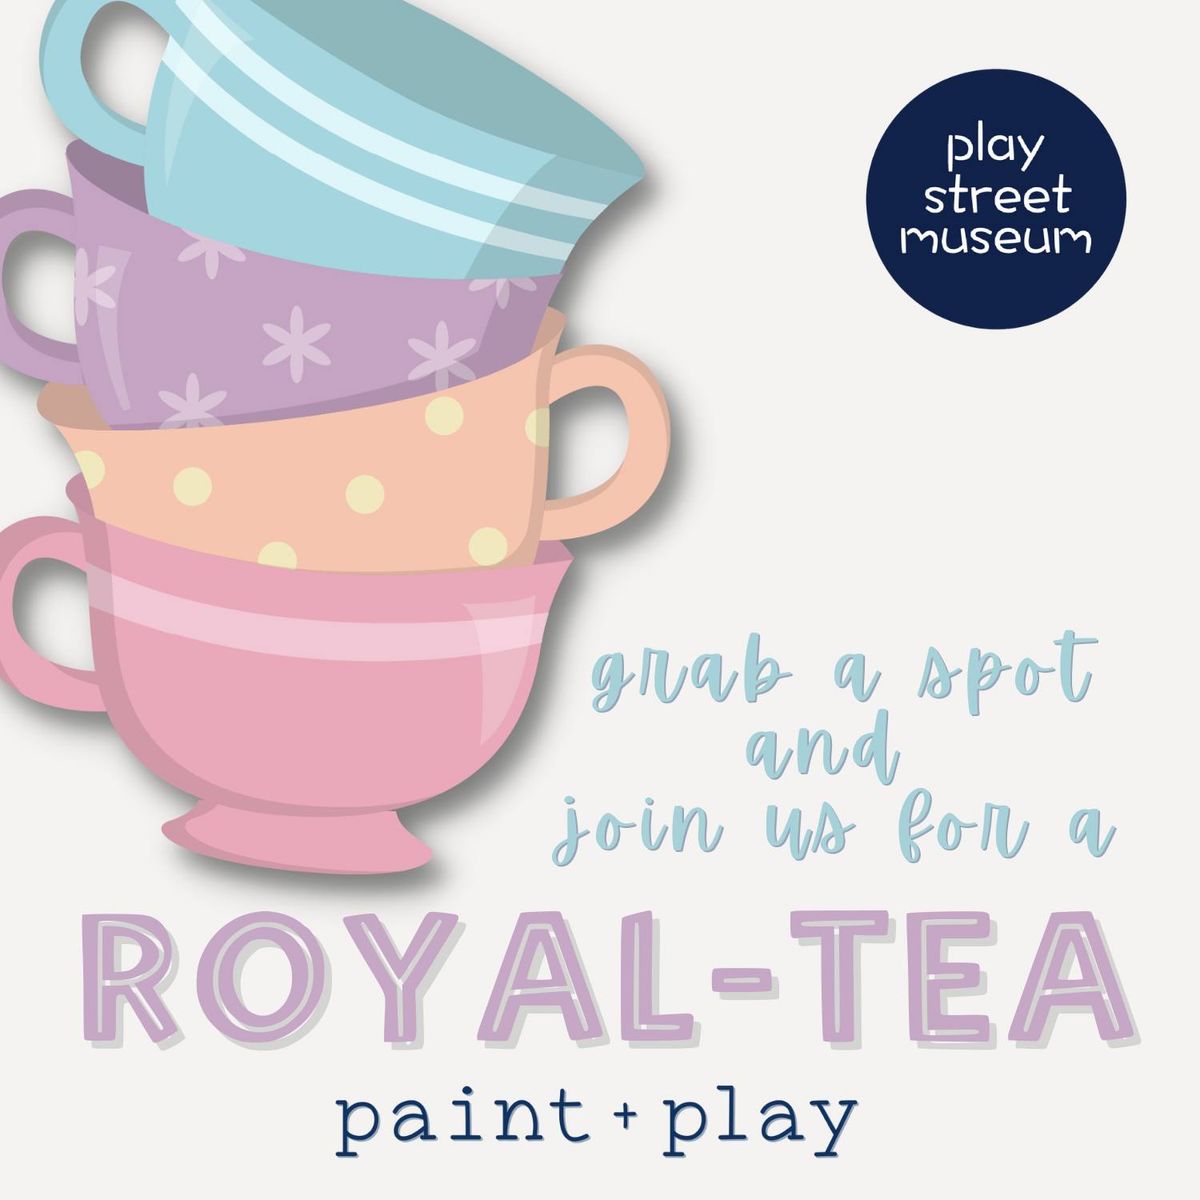 Royal Tea Paint & Play - Play Street Museum Ft. Worth